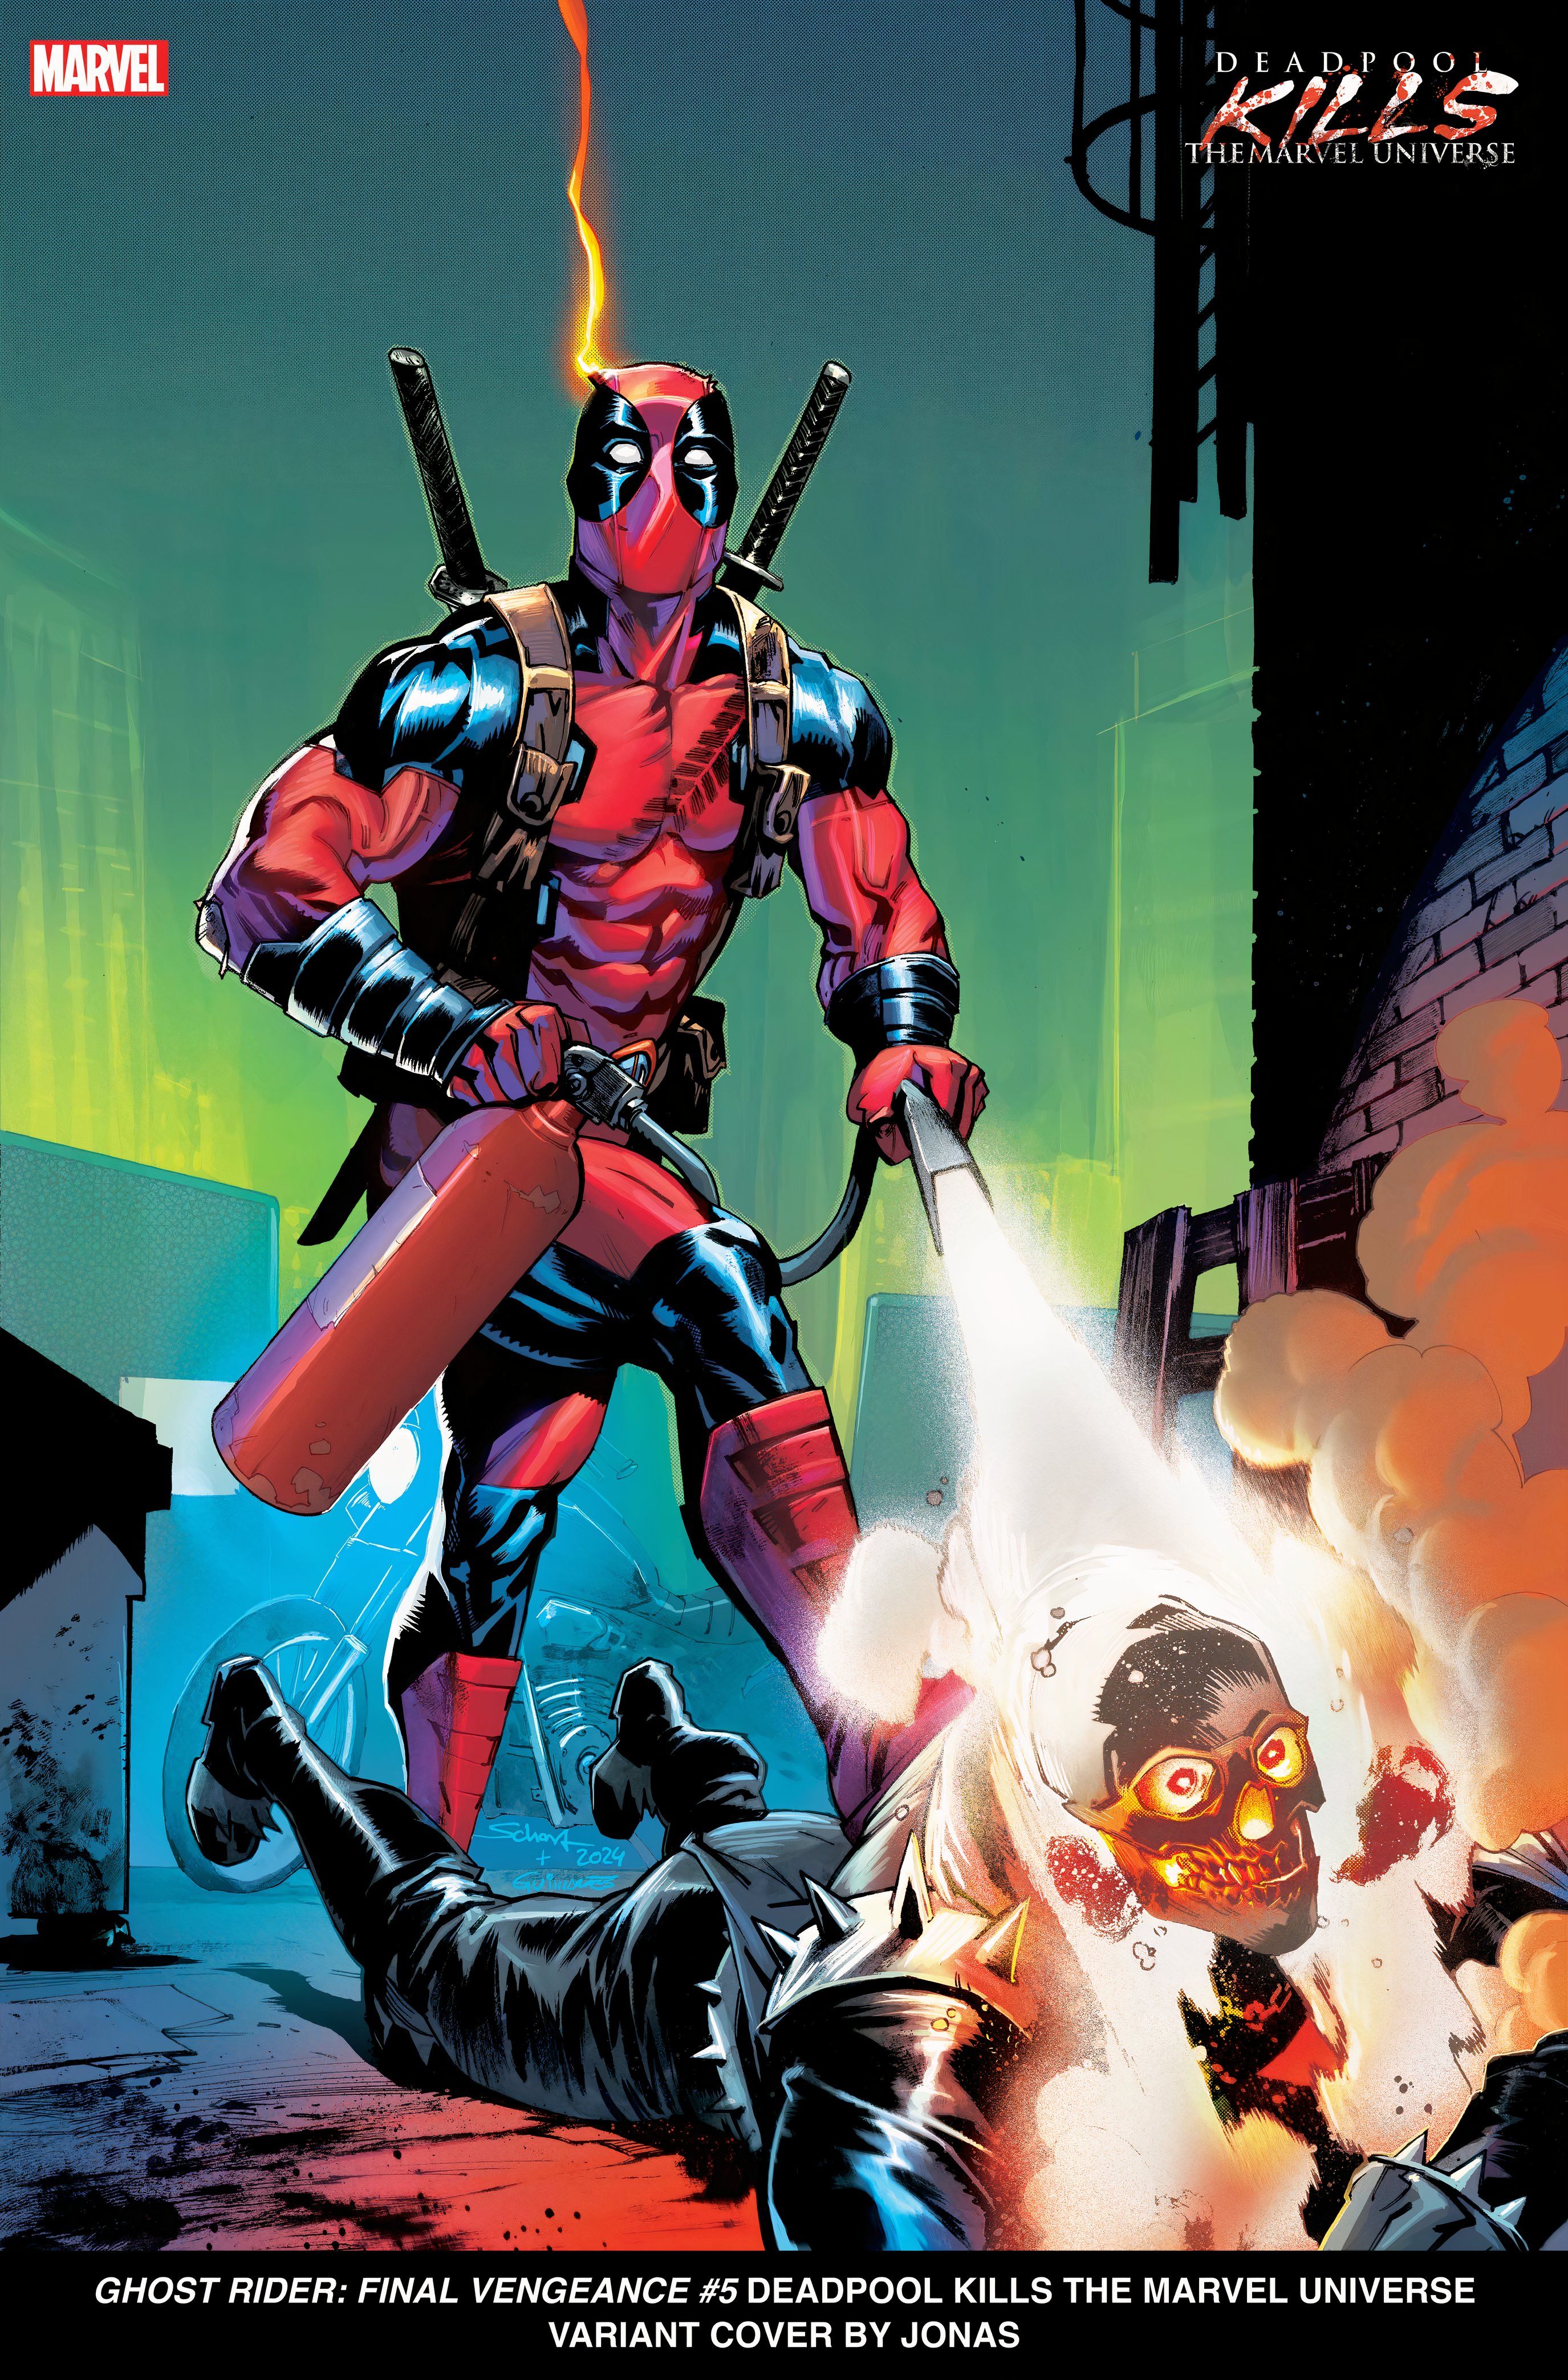 Ghost Rider Final Vengence # 5 Deadpool mata o universo Marvel